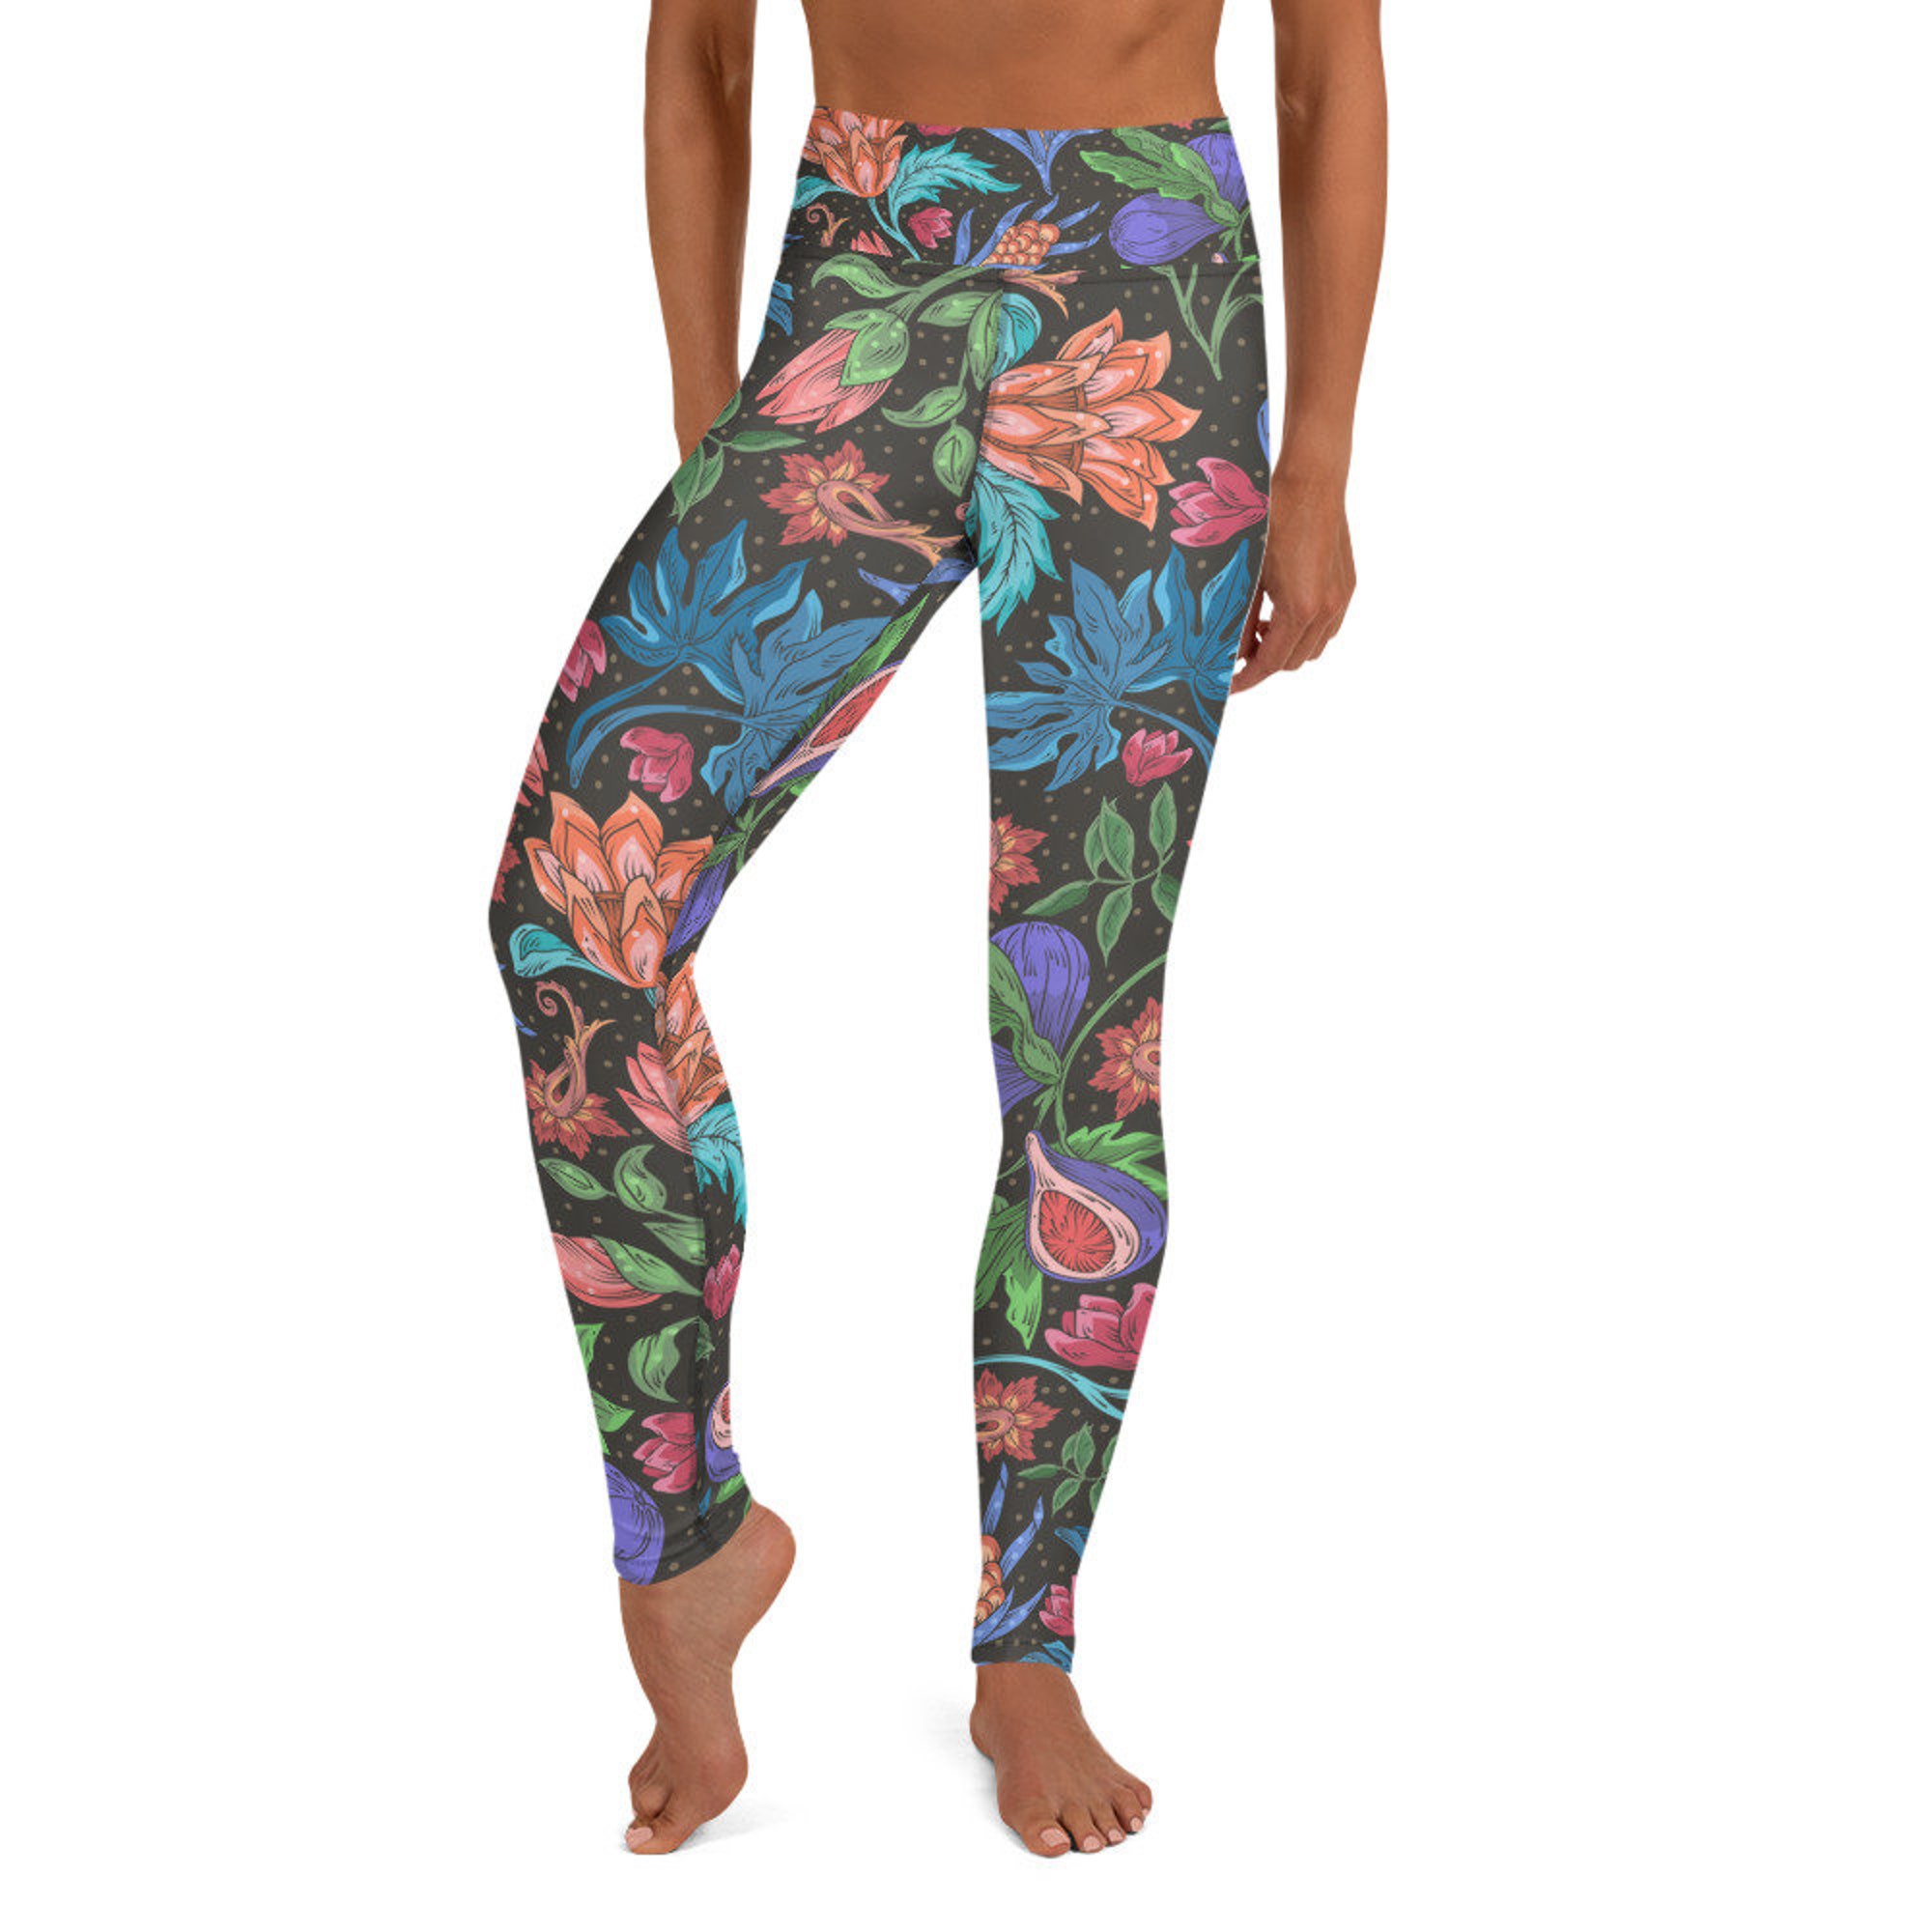 Discover Sweet Figs Yoga Leggings, Yoga Pants